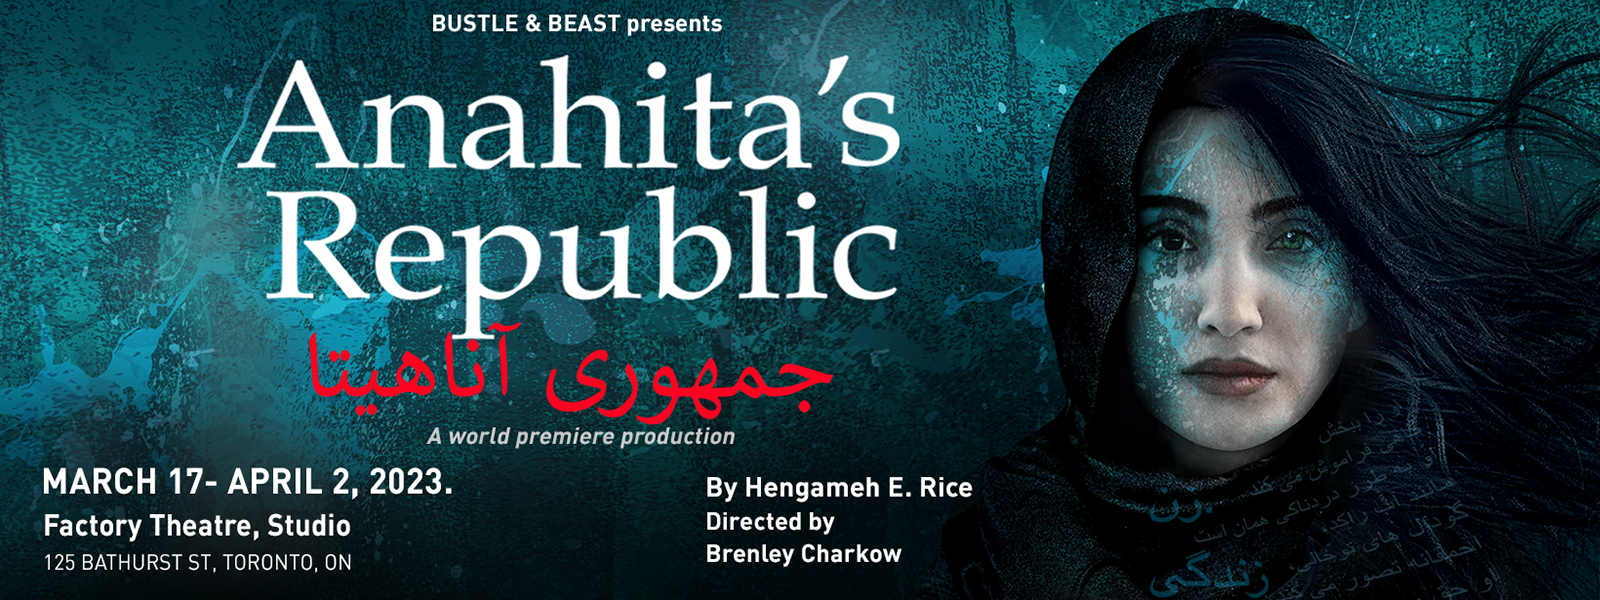 Anahita’s Republic show poster